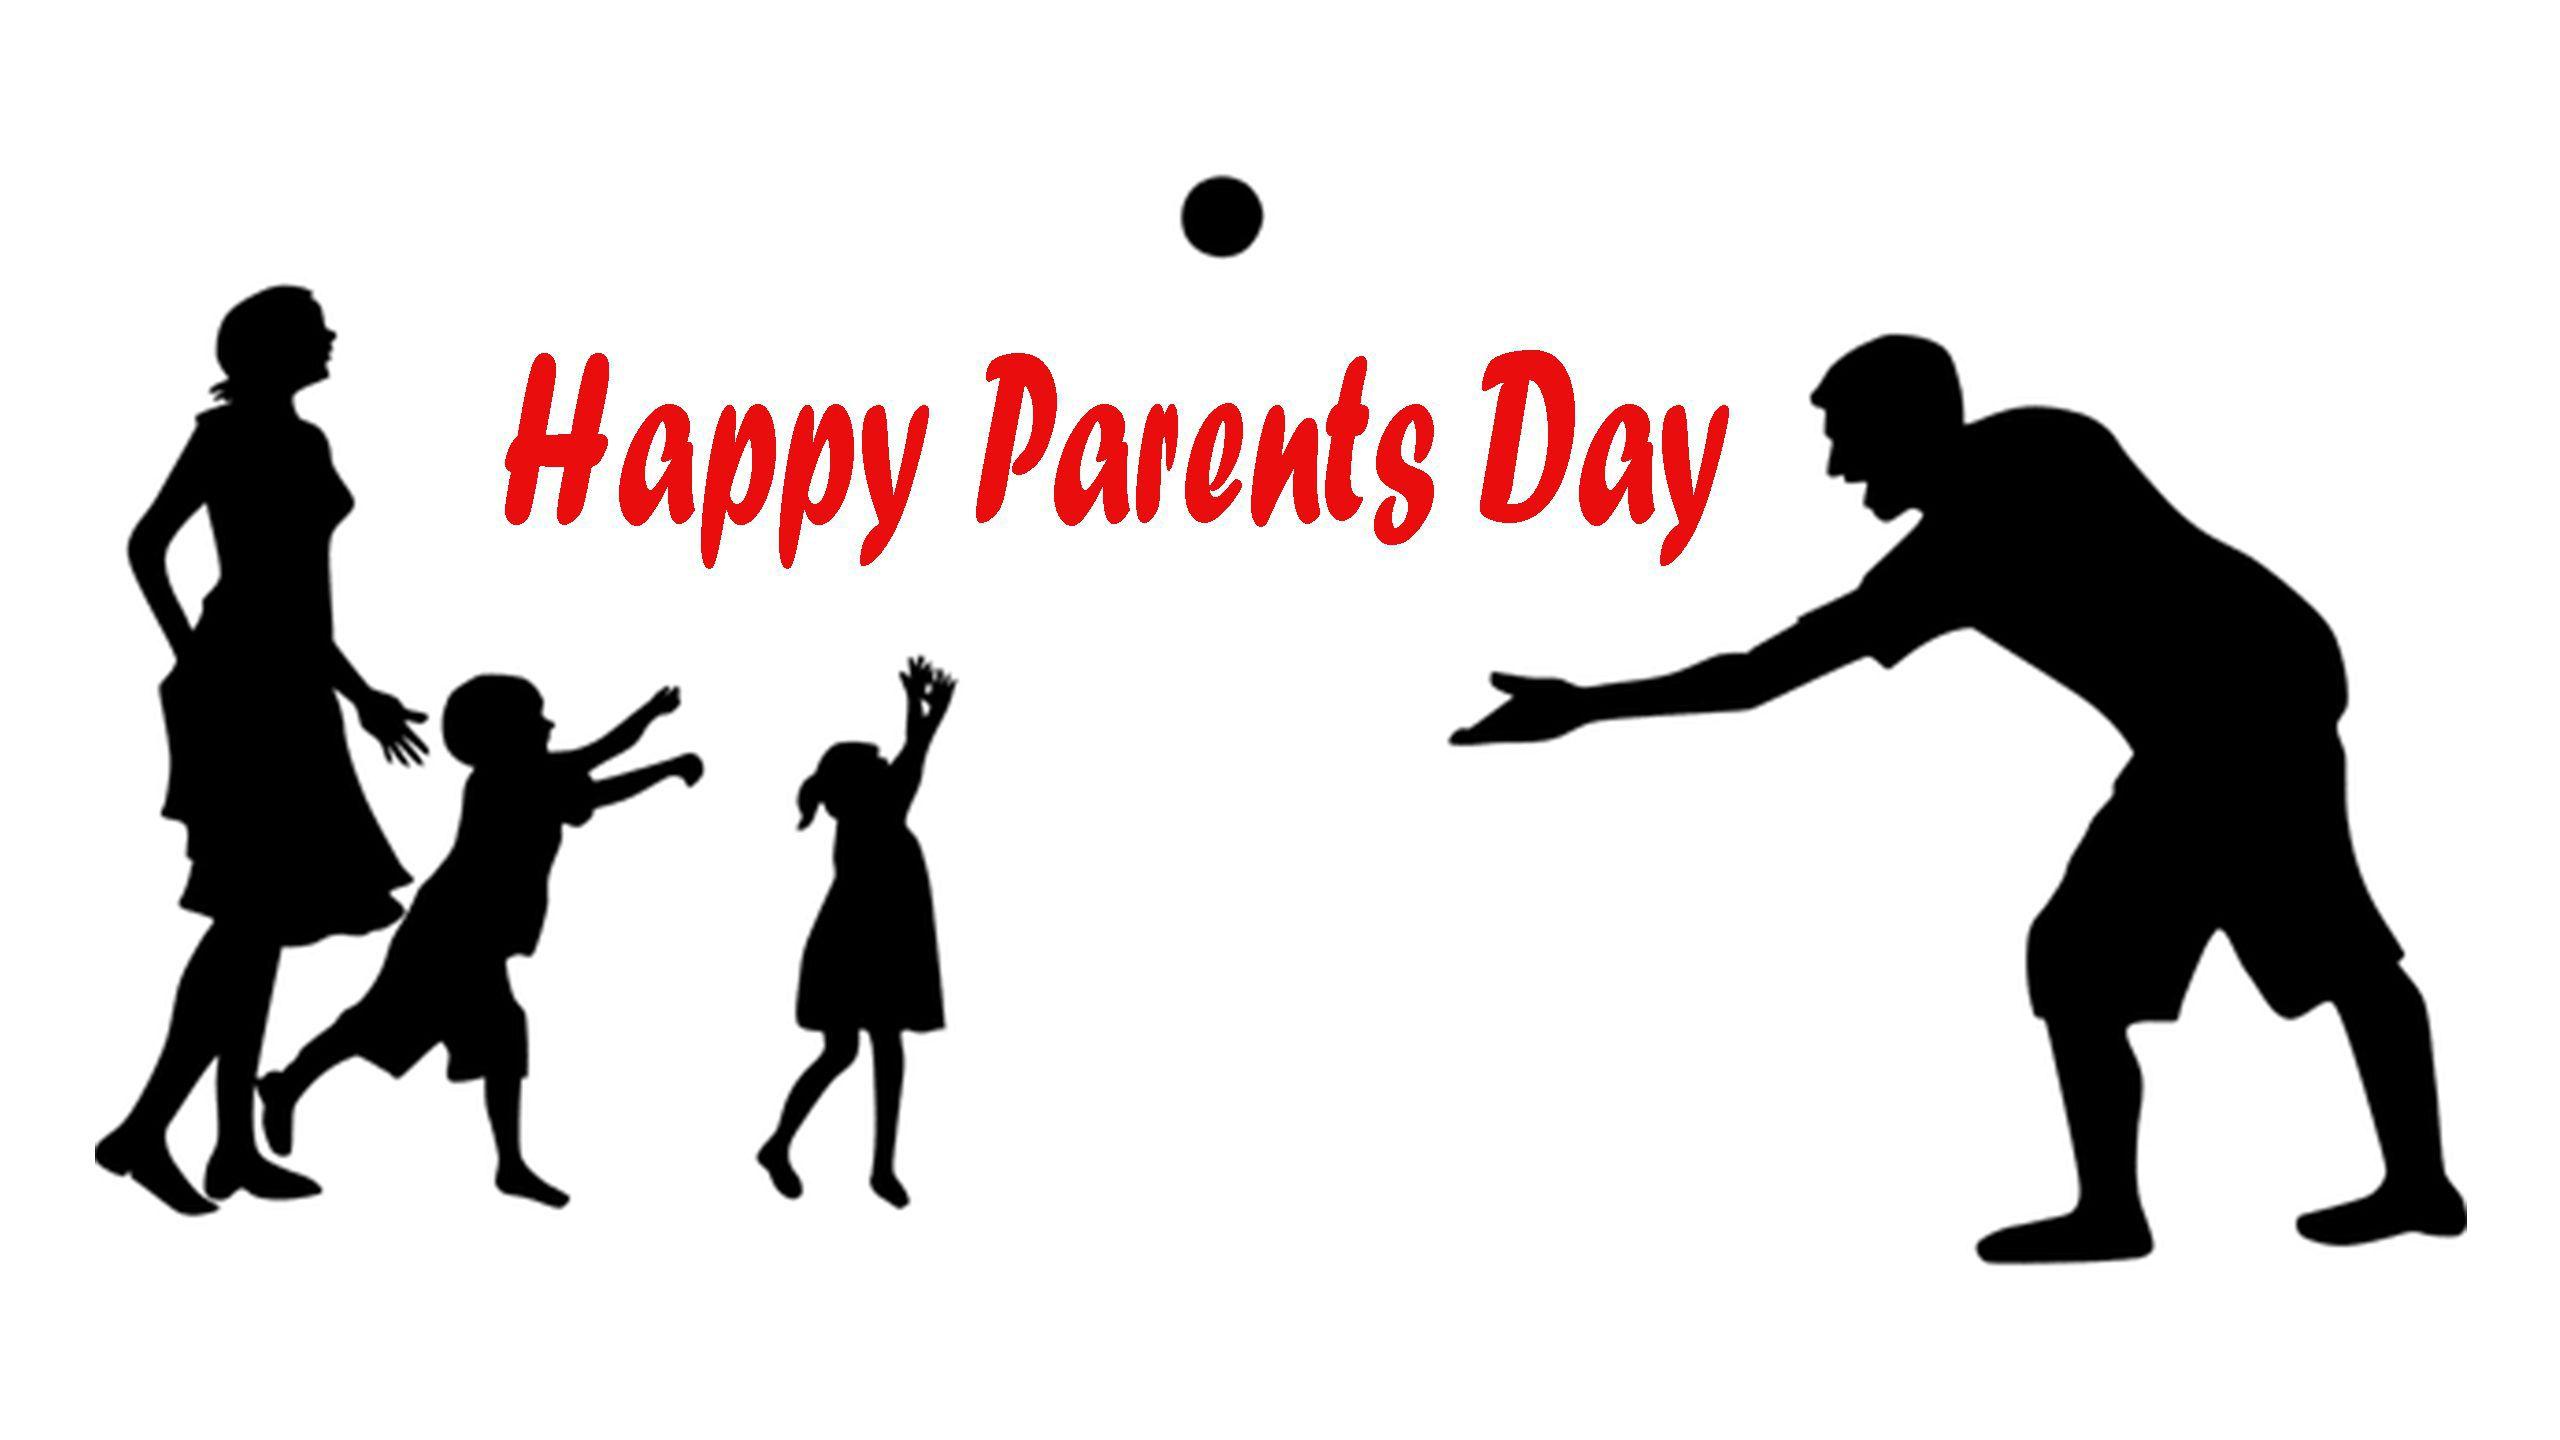 Happy Parents Day Wallpaper Image